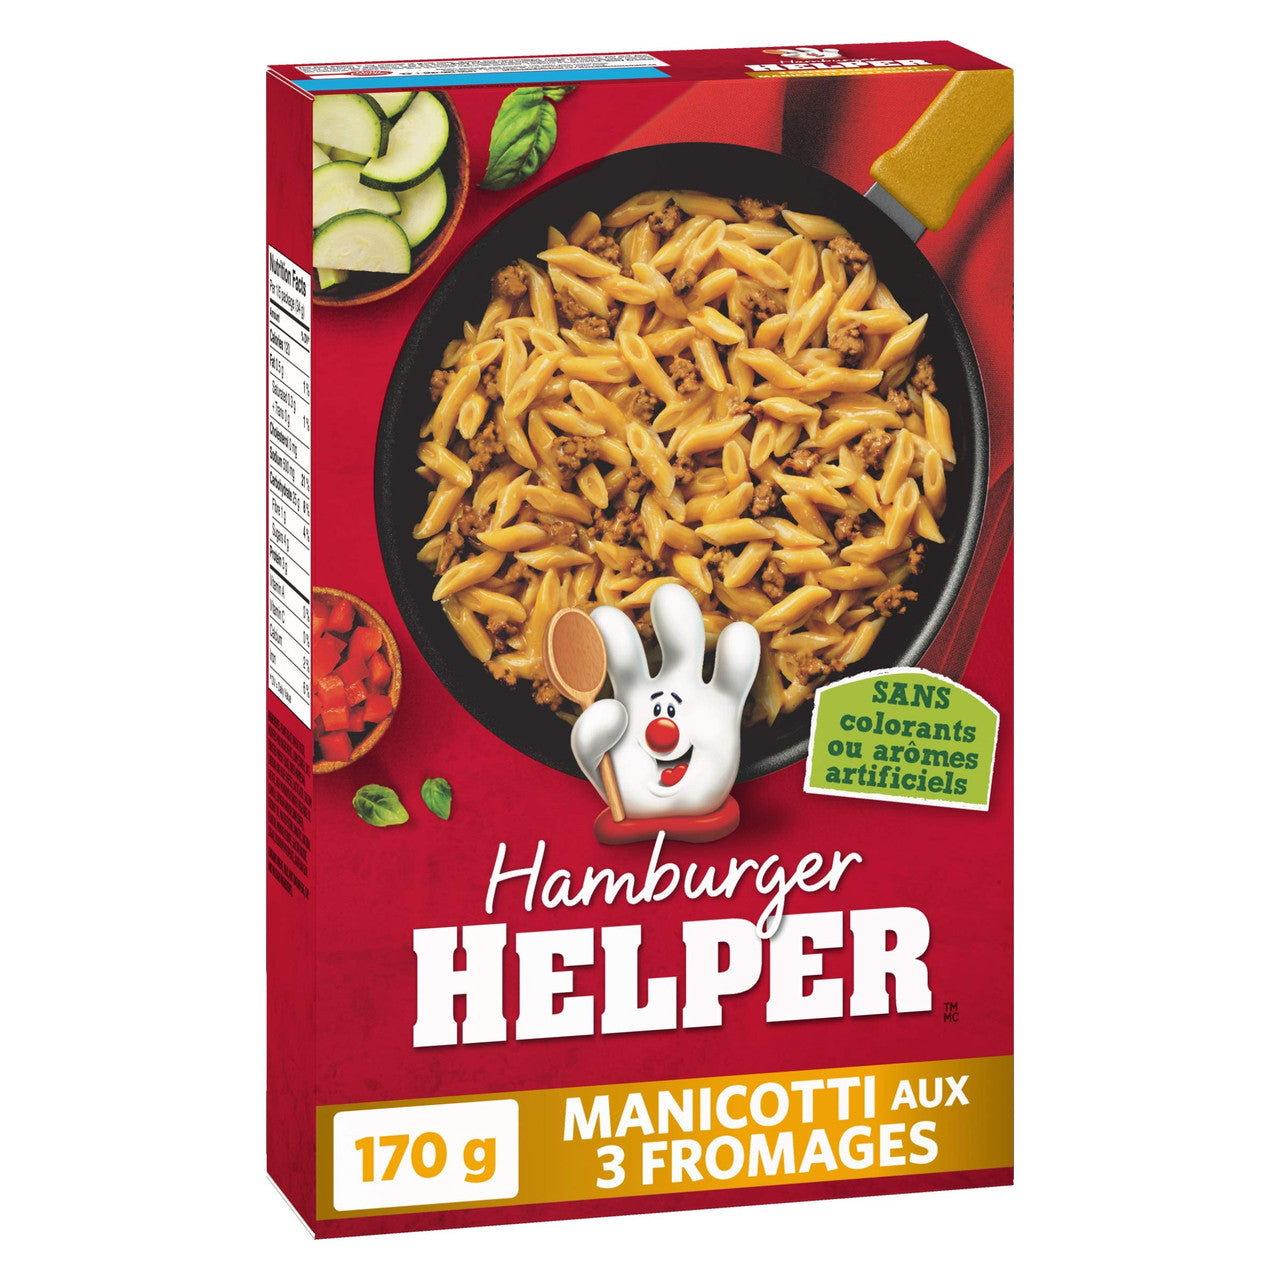 Hamburger Helper, 3 Cheese Manicotti, 170g/6oz., {Imported from Canada}